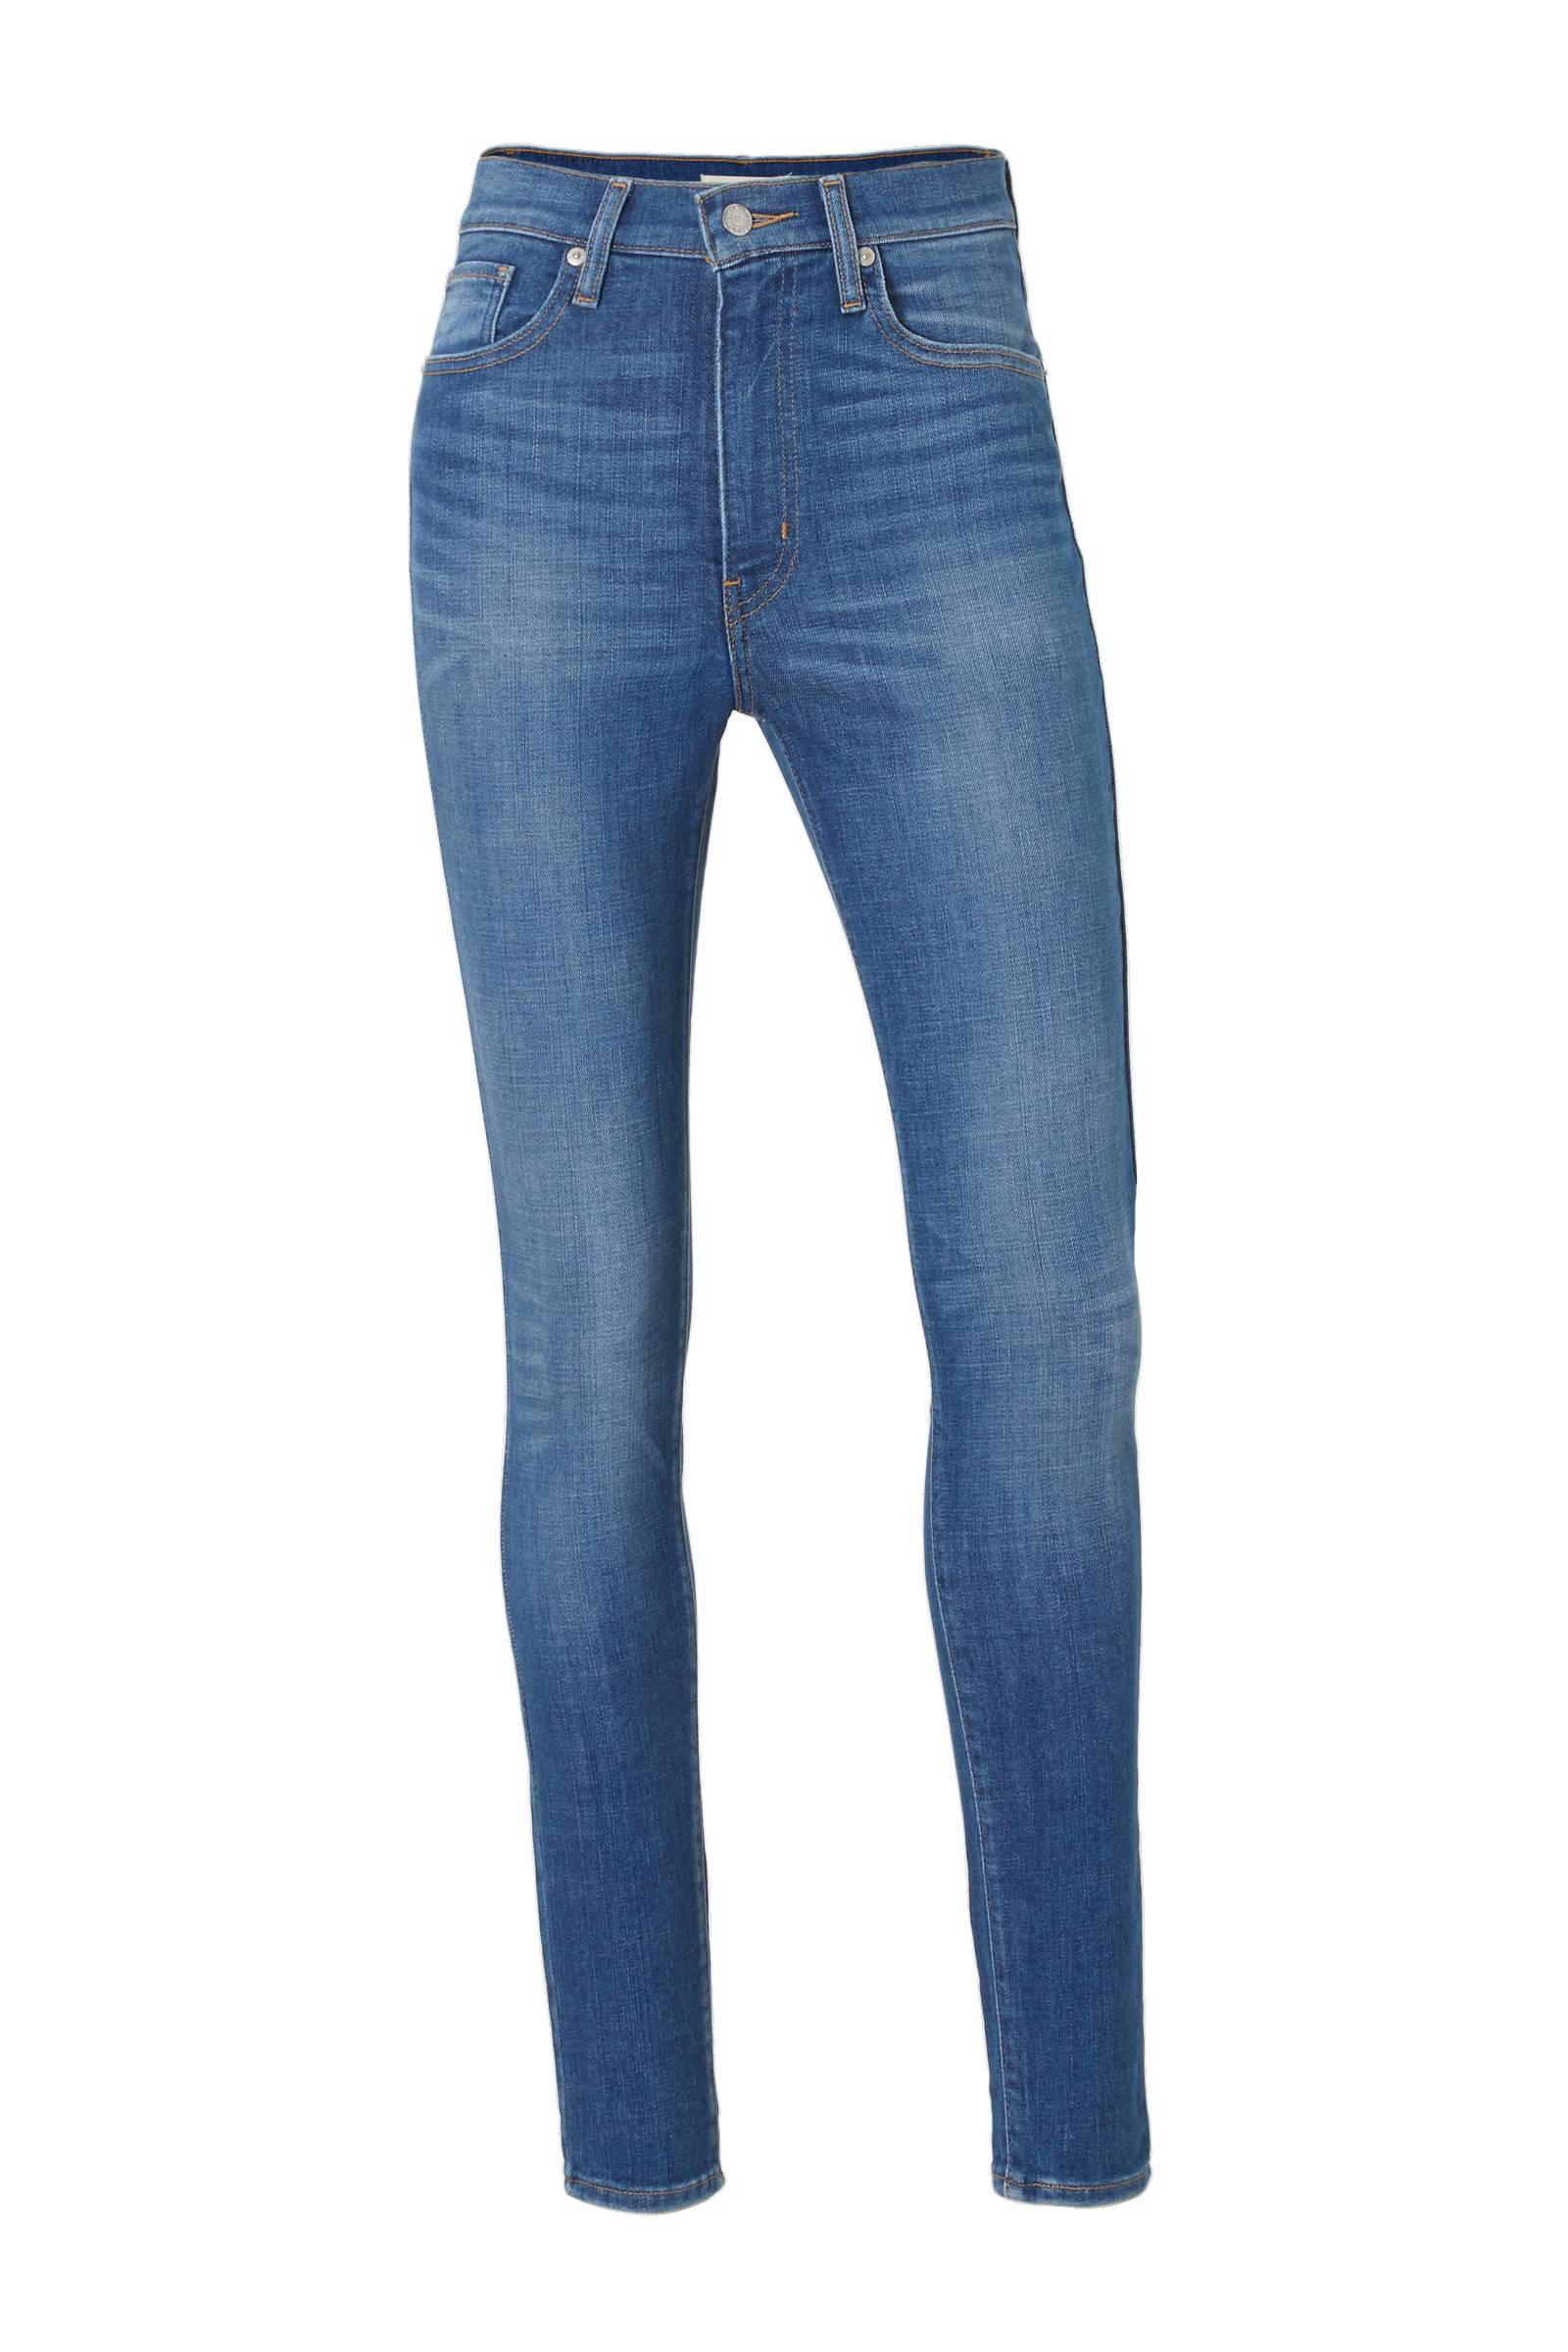 Levi's Mile high super skinny jeans 